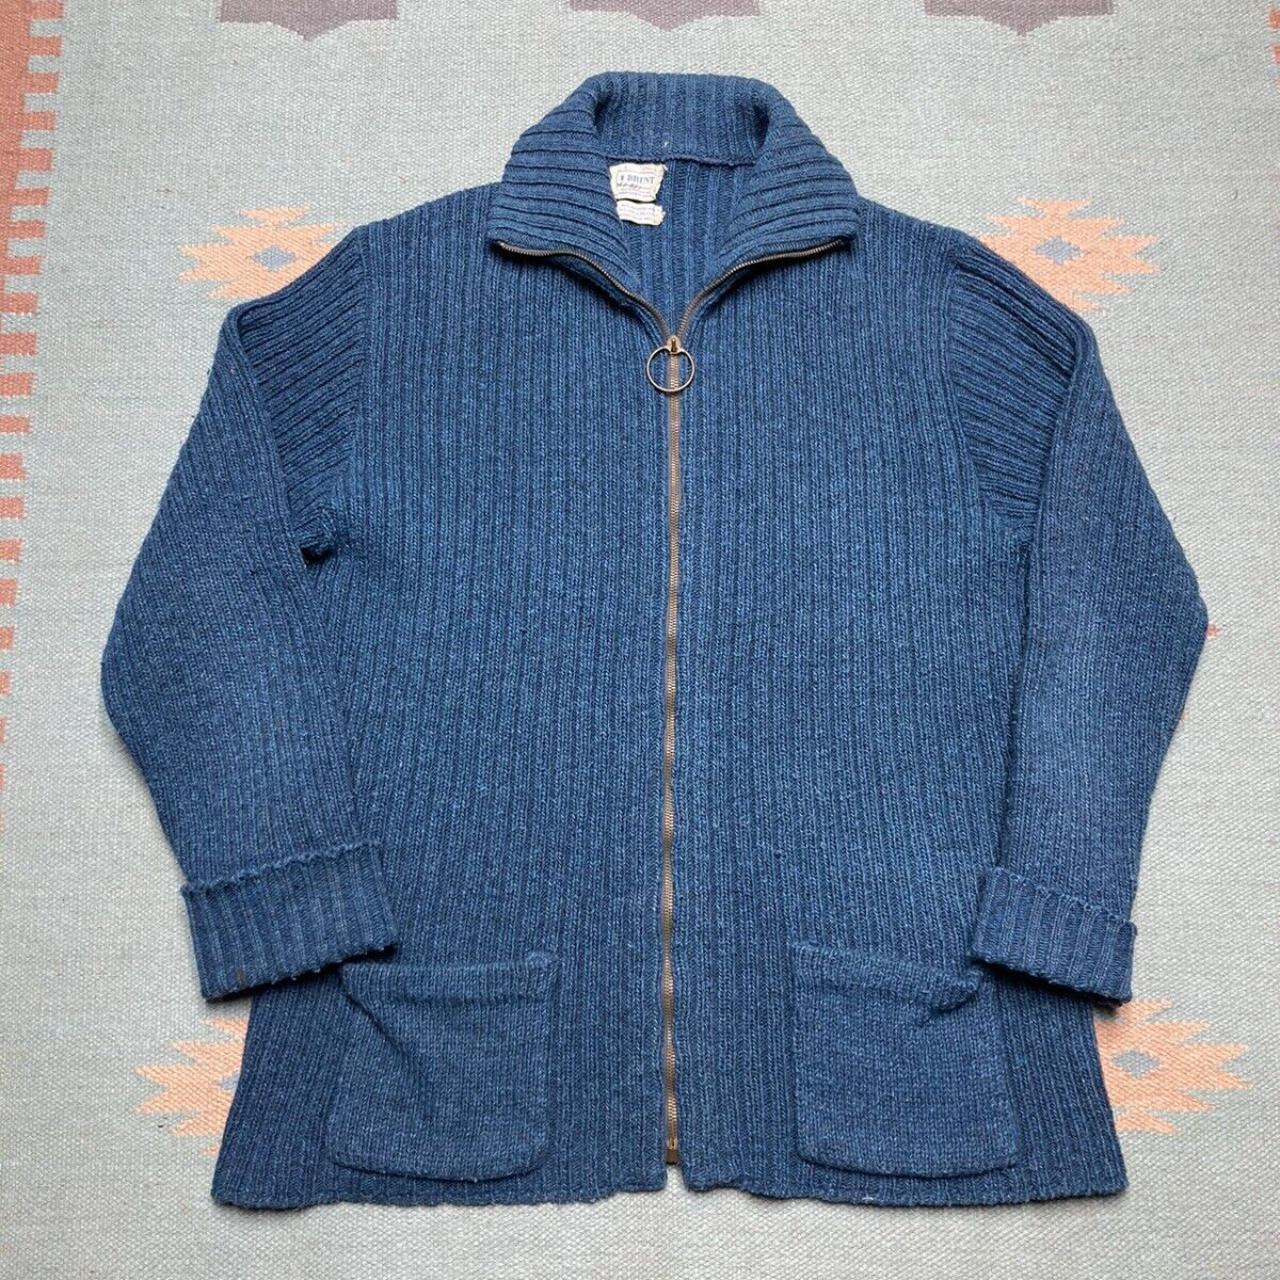 Vintage 60s Brent cardigan sweater zip knit